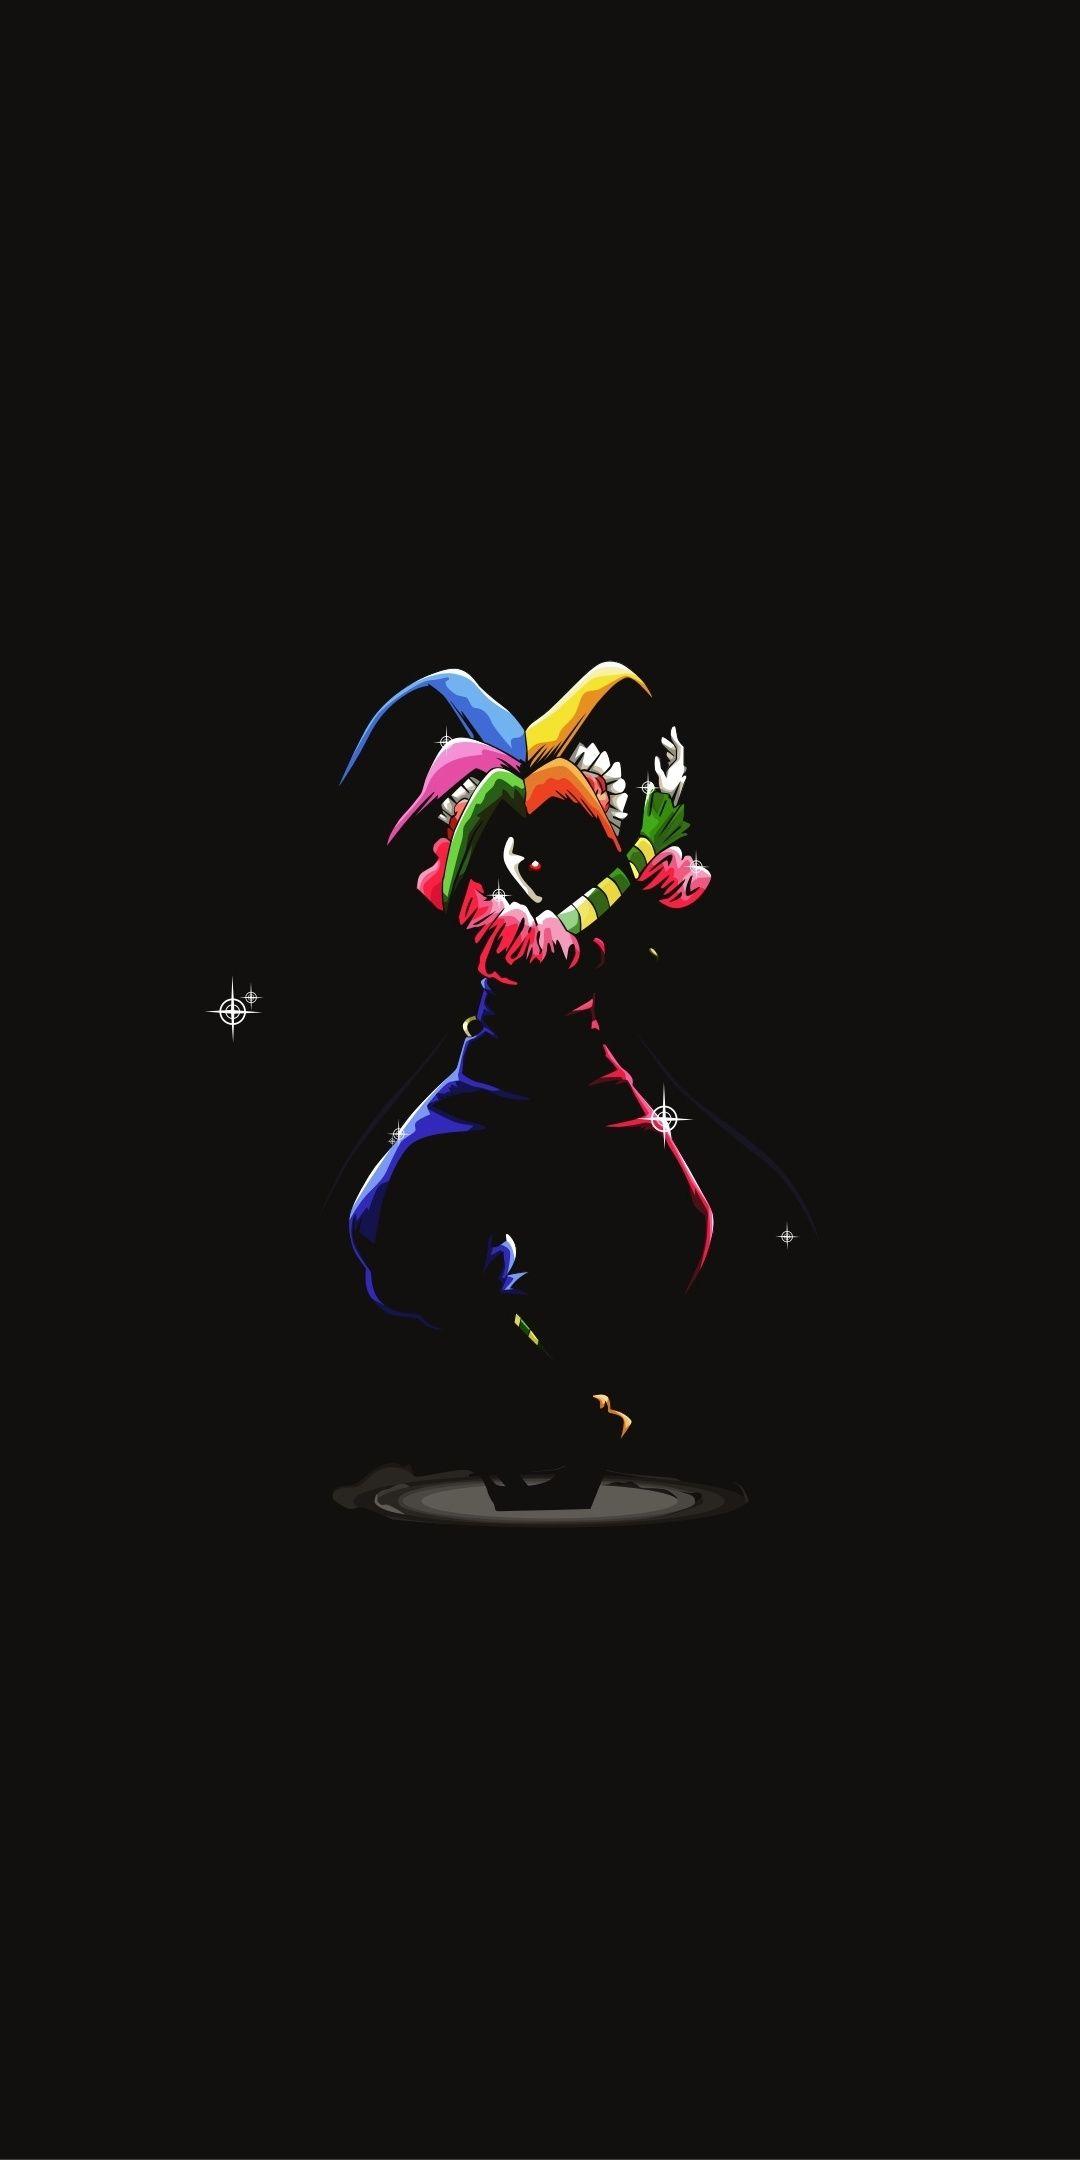 Premium AI Image  Comic Joker Comedy Character Actor Funny clown costume  Wallpaper illustrations of fear makeup masks